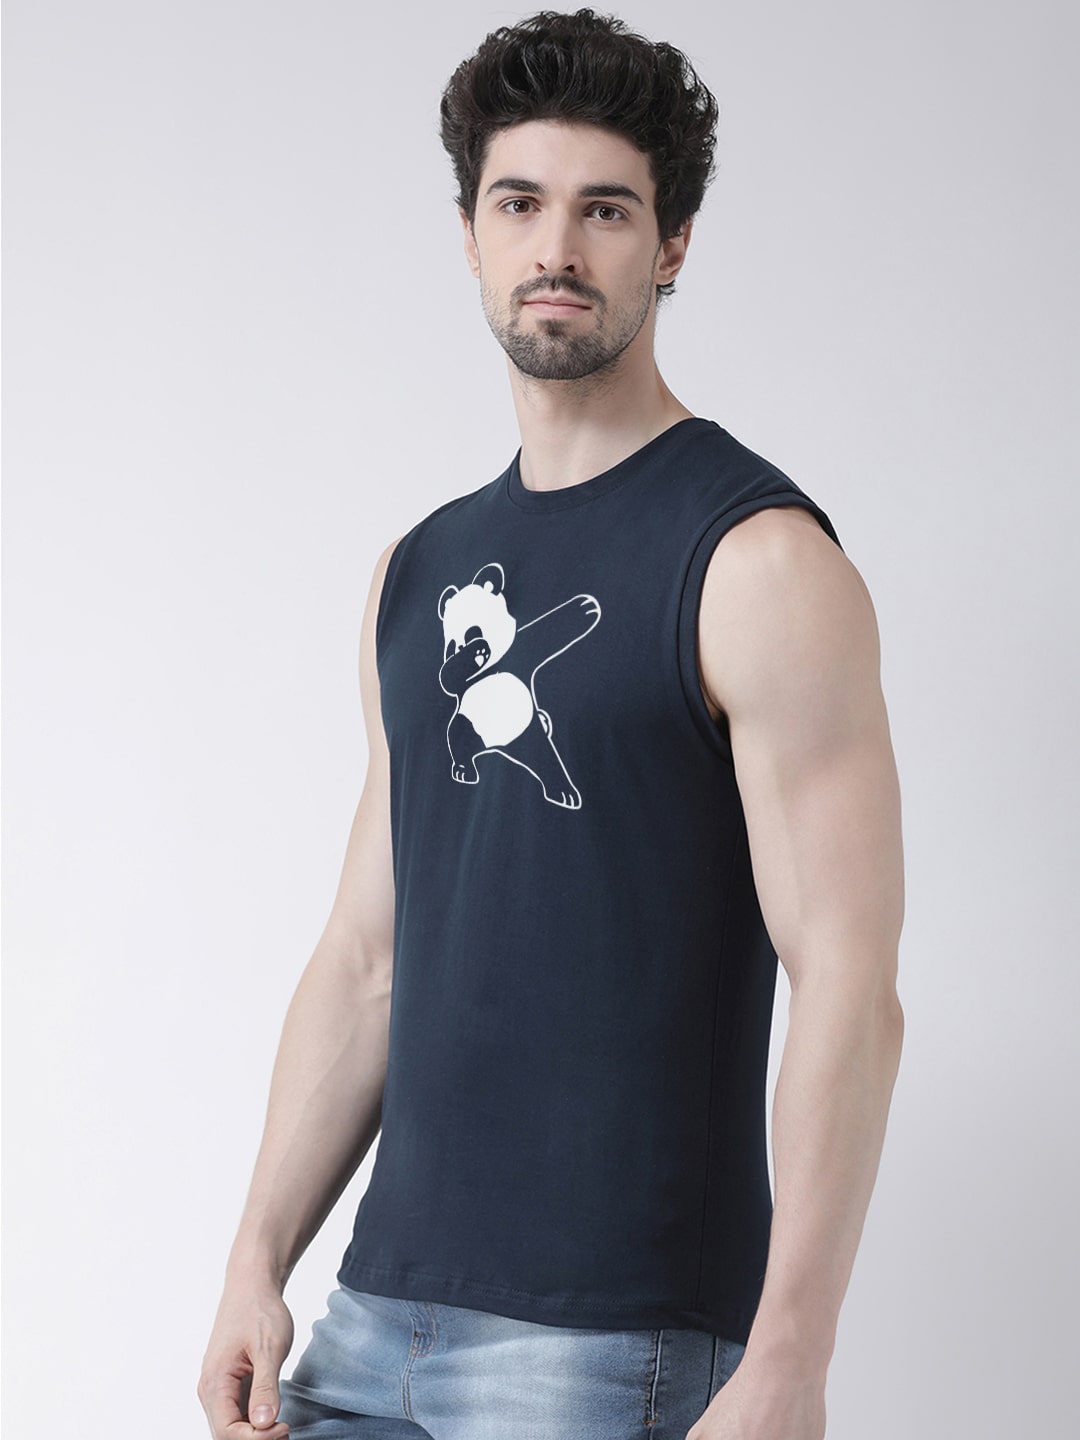 Men Dancing Panda Printed Cotton Gym Vest - Friskers